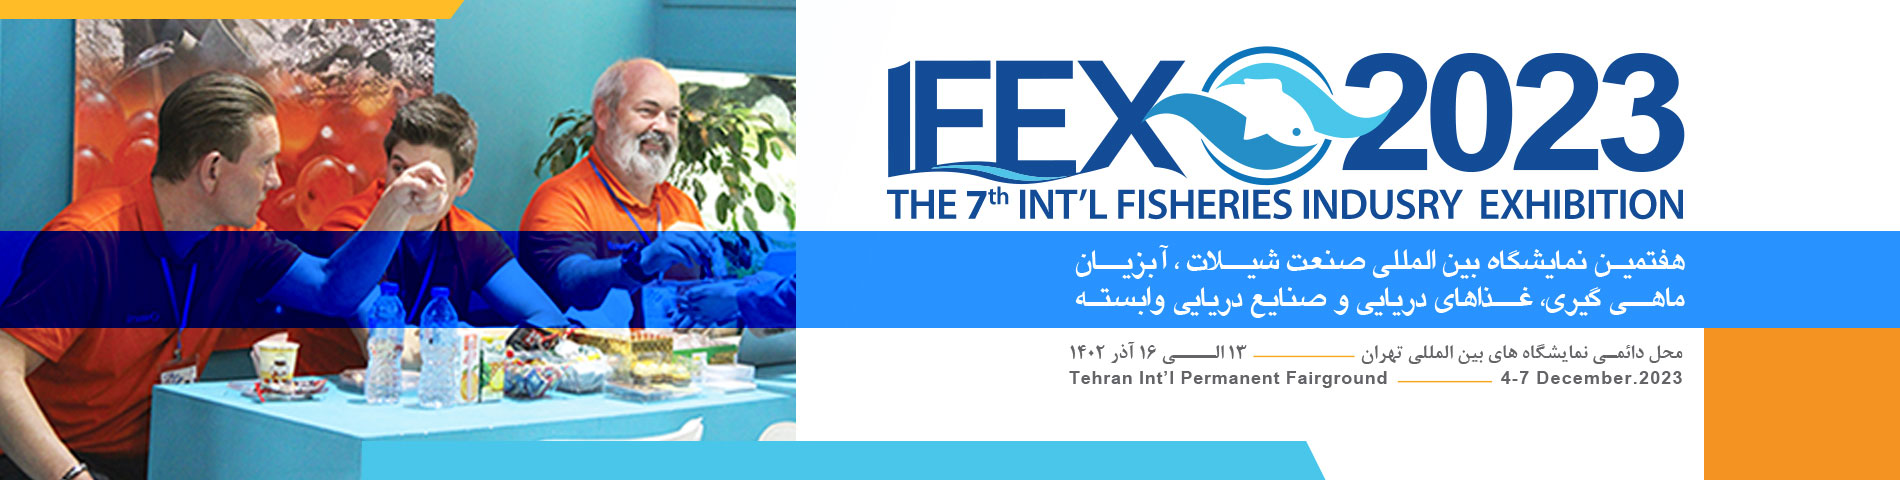 1678911799 header 2 - The 7th International Fisheries Industry (IFEX) Exhibition 2023 in Iran/Tehran